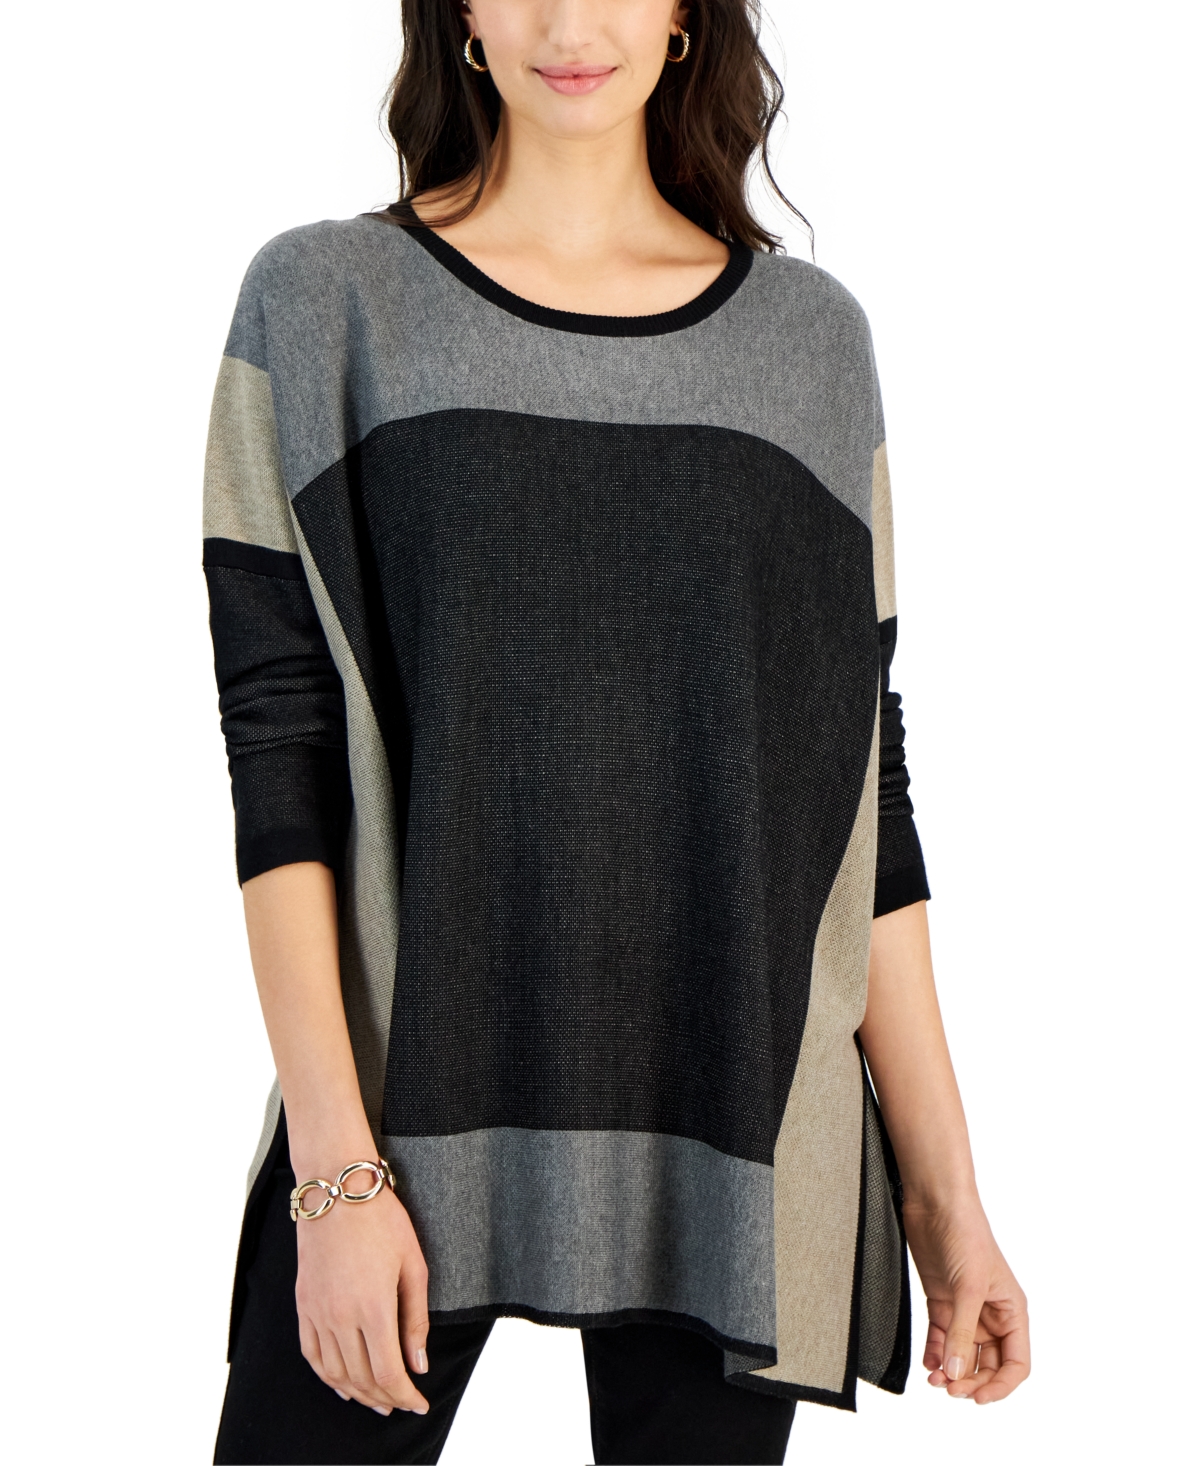 Women's Crewneck Colorblocked Poncho Sweater - Black  Charcoal Grey